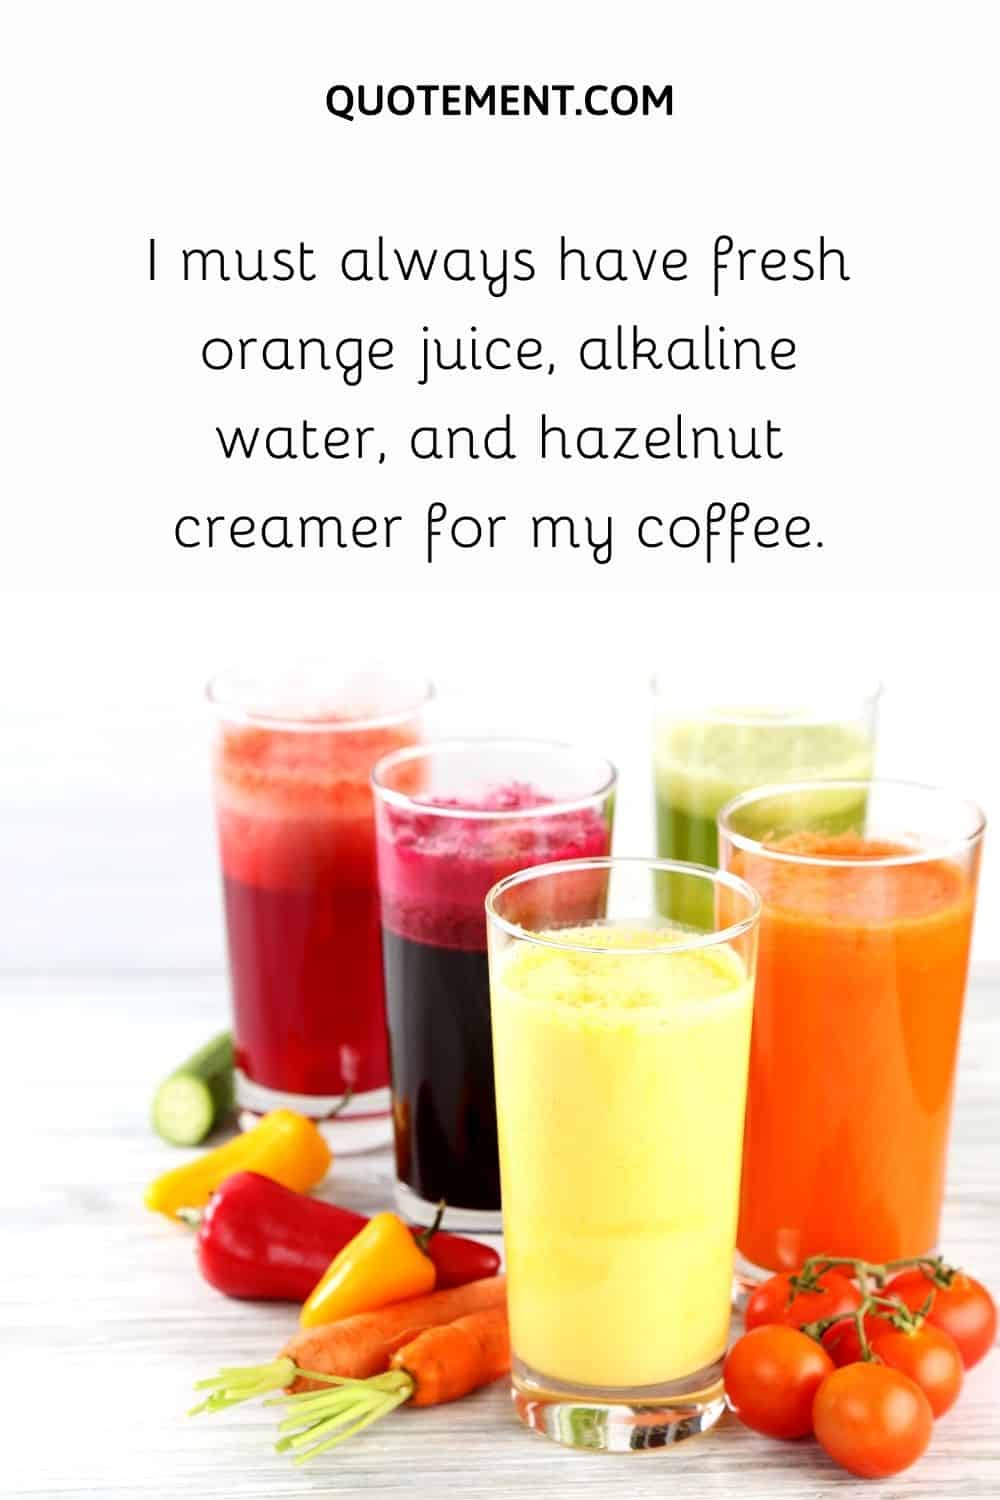 I must always have fresh orange juice, alkaline water, and hazelnut creamer for my coffee